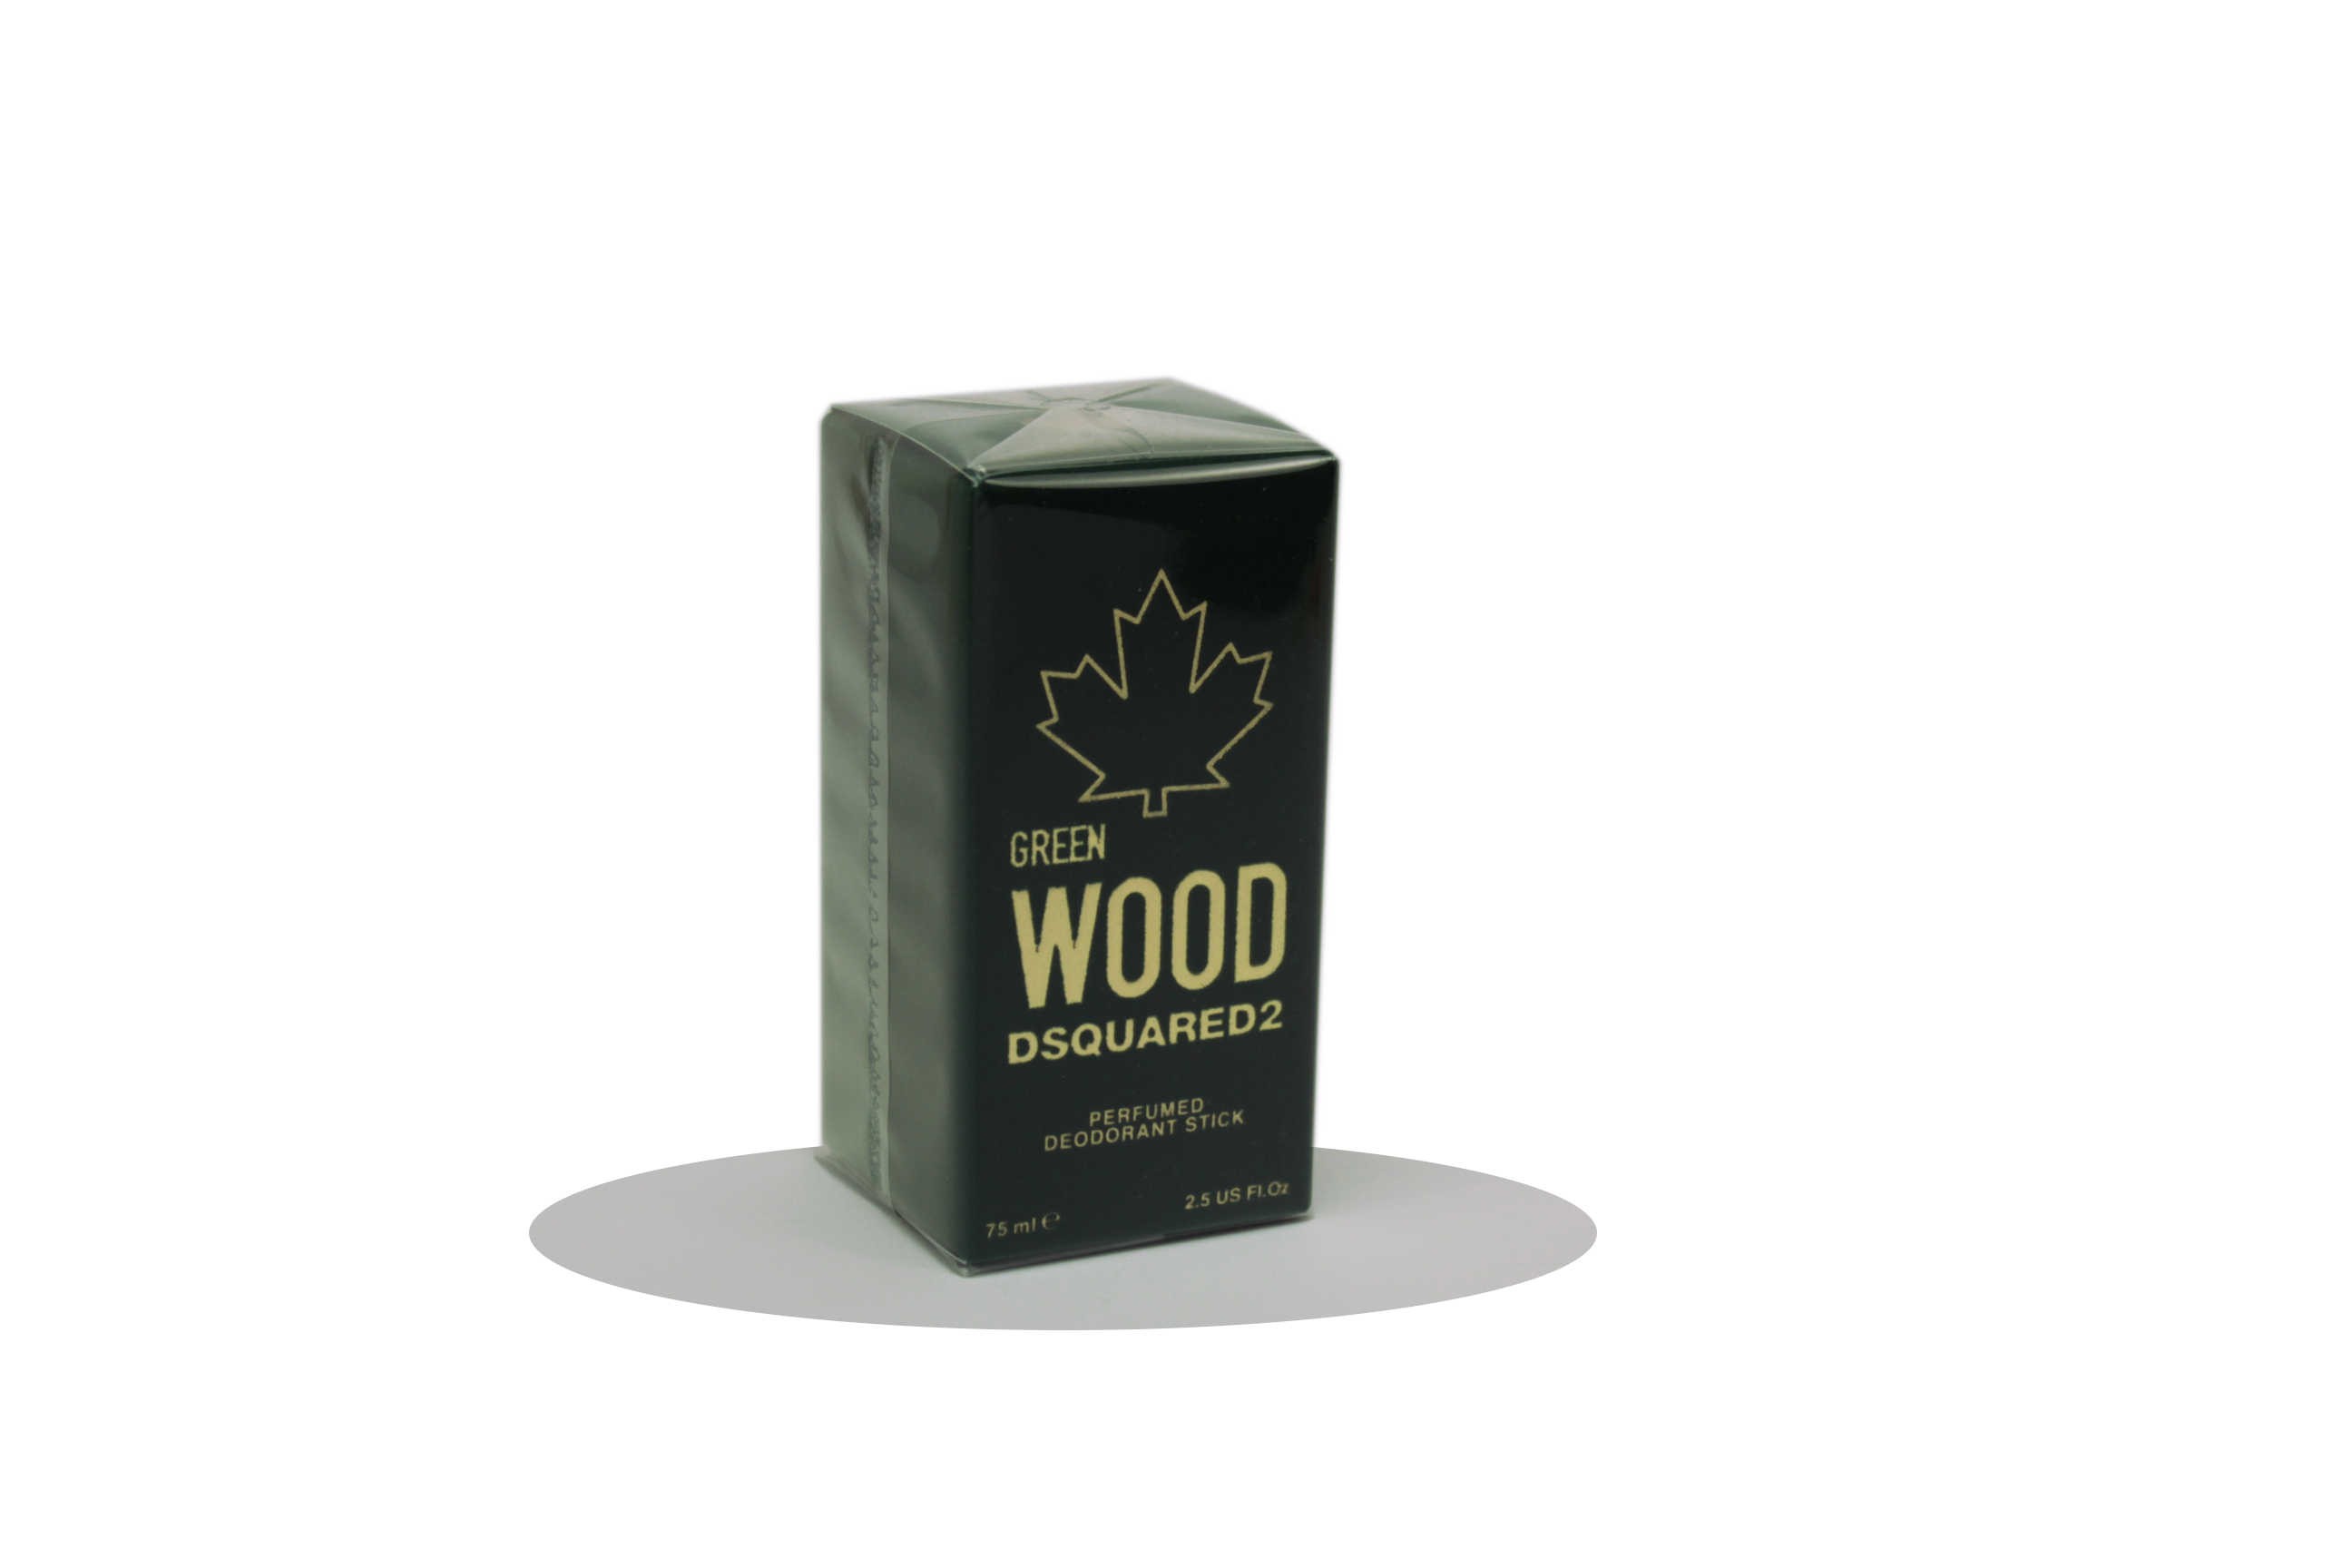 dsquared wood deodorant stick